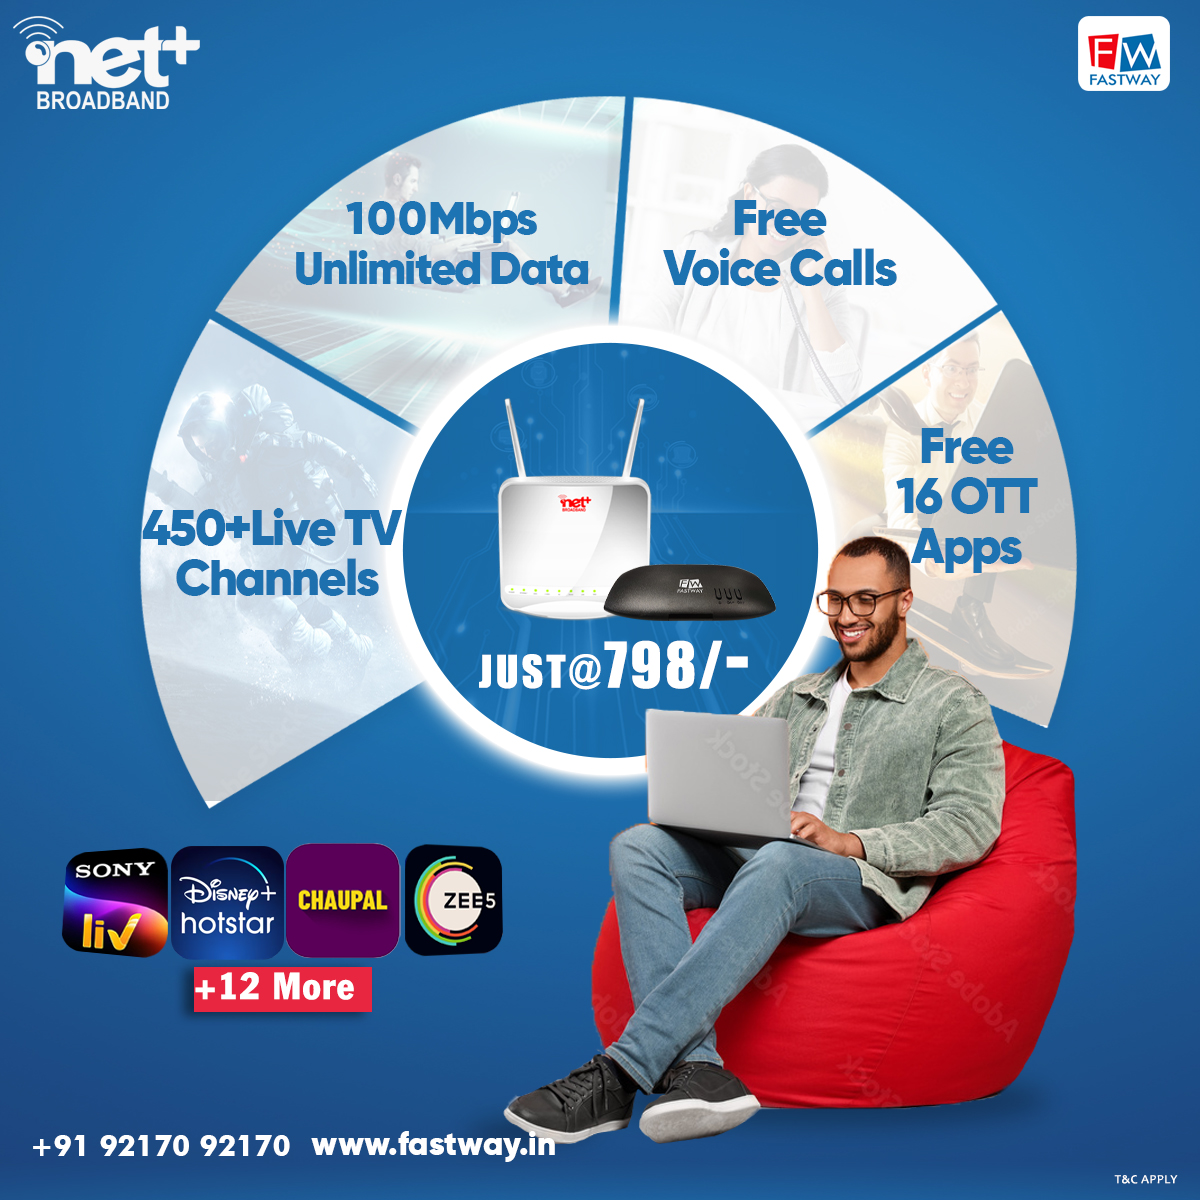 #netplus #newplans #internet #unlimited #superfast #wifi #free #voicecalls #OTT #apps #netplusbroadband